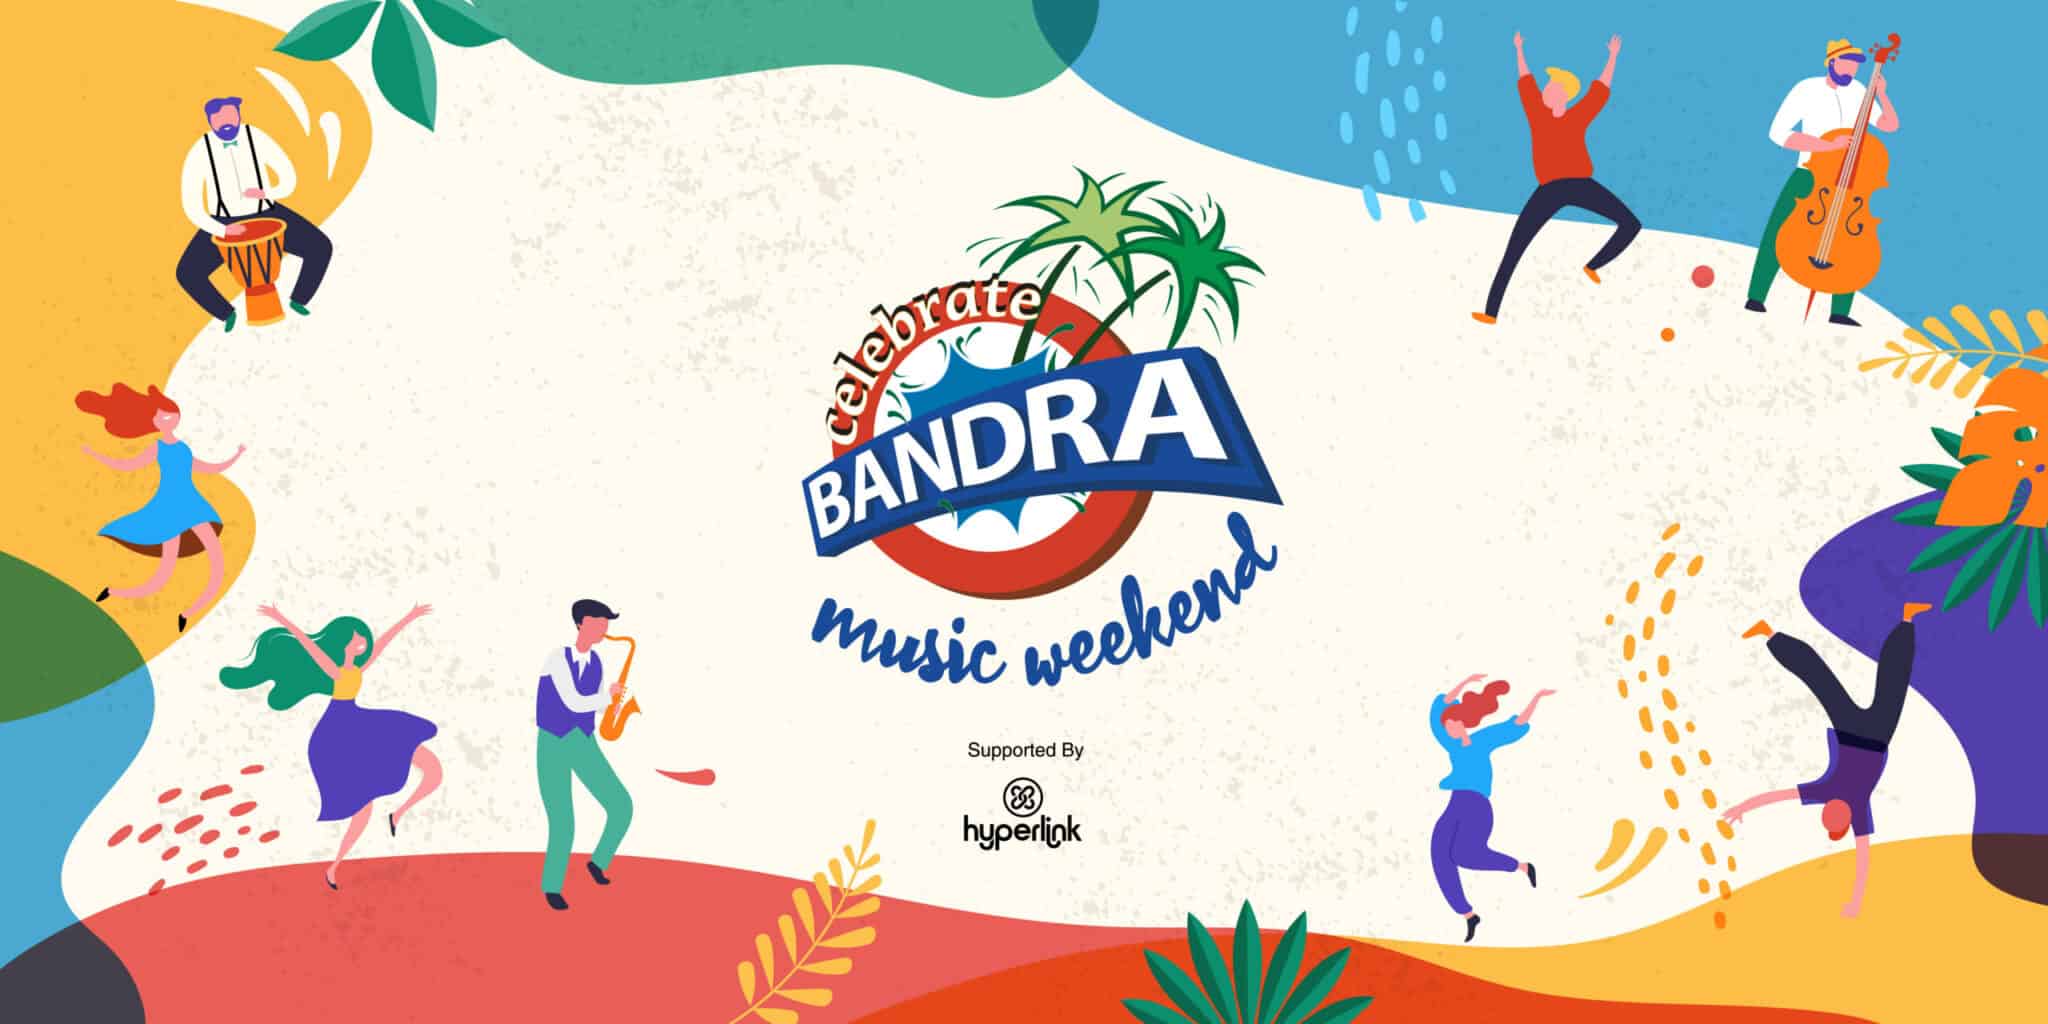 Celebrate Bandra Music Edition